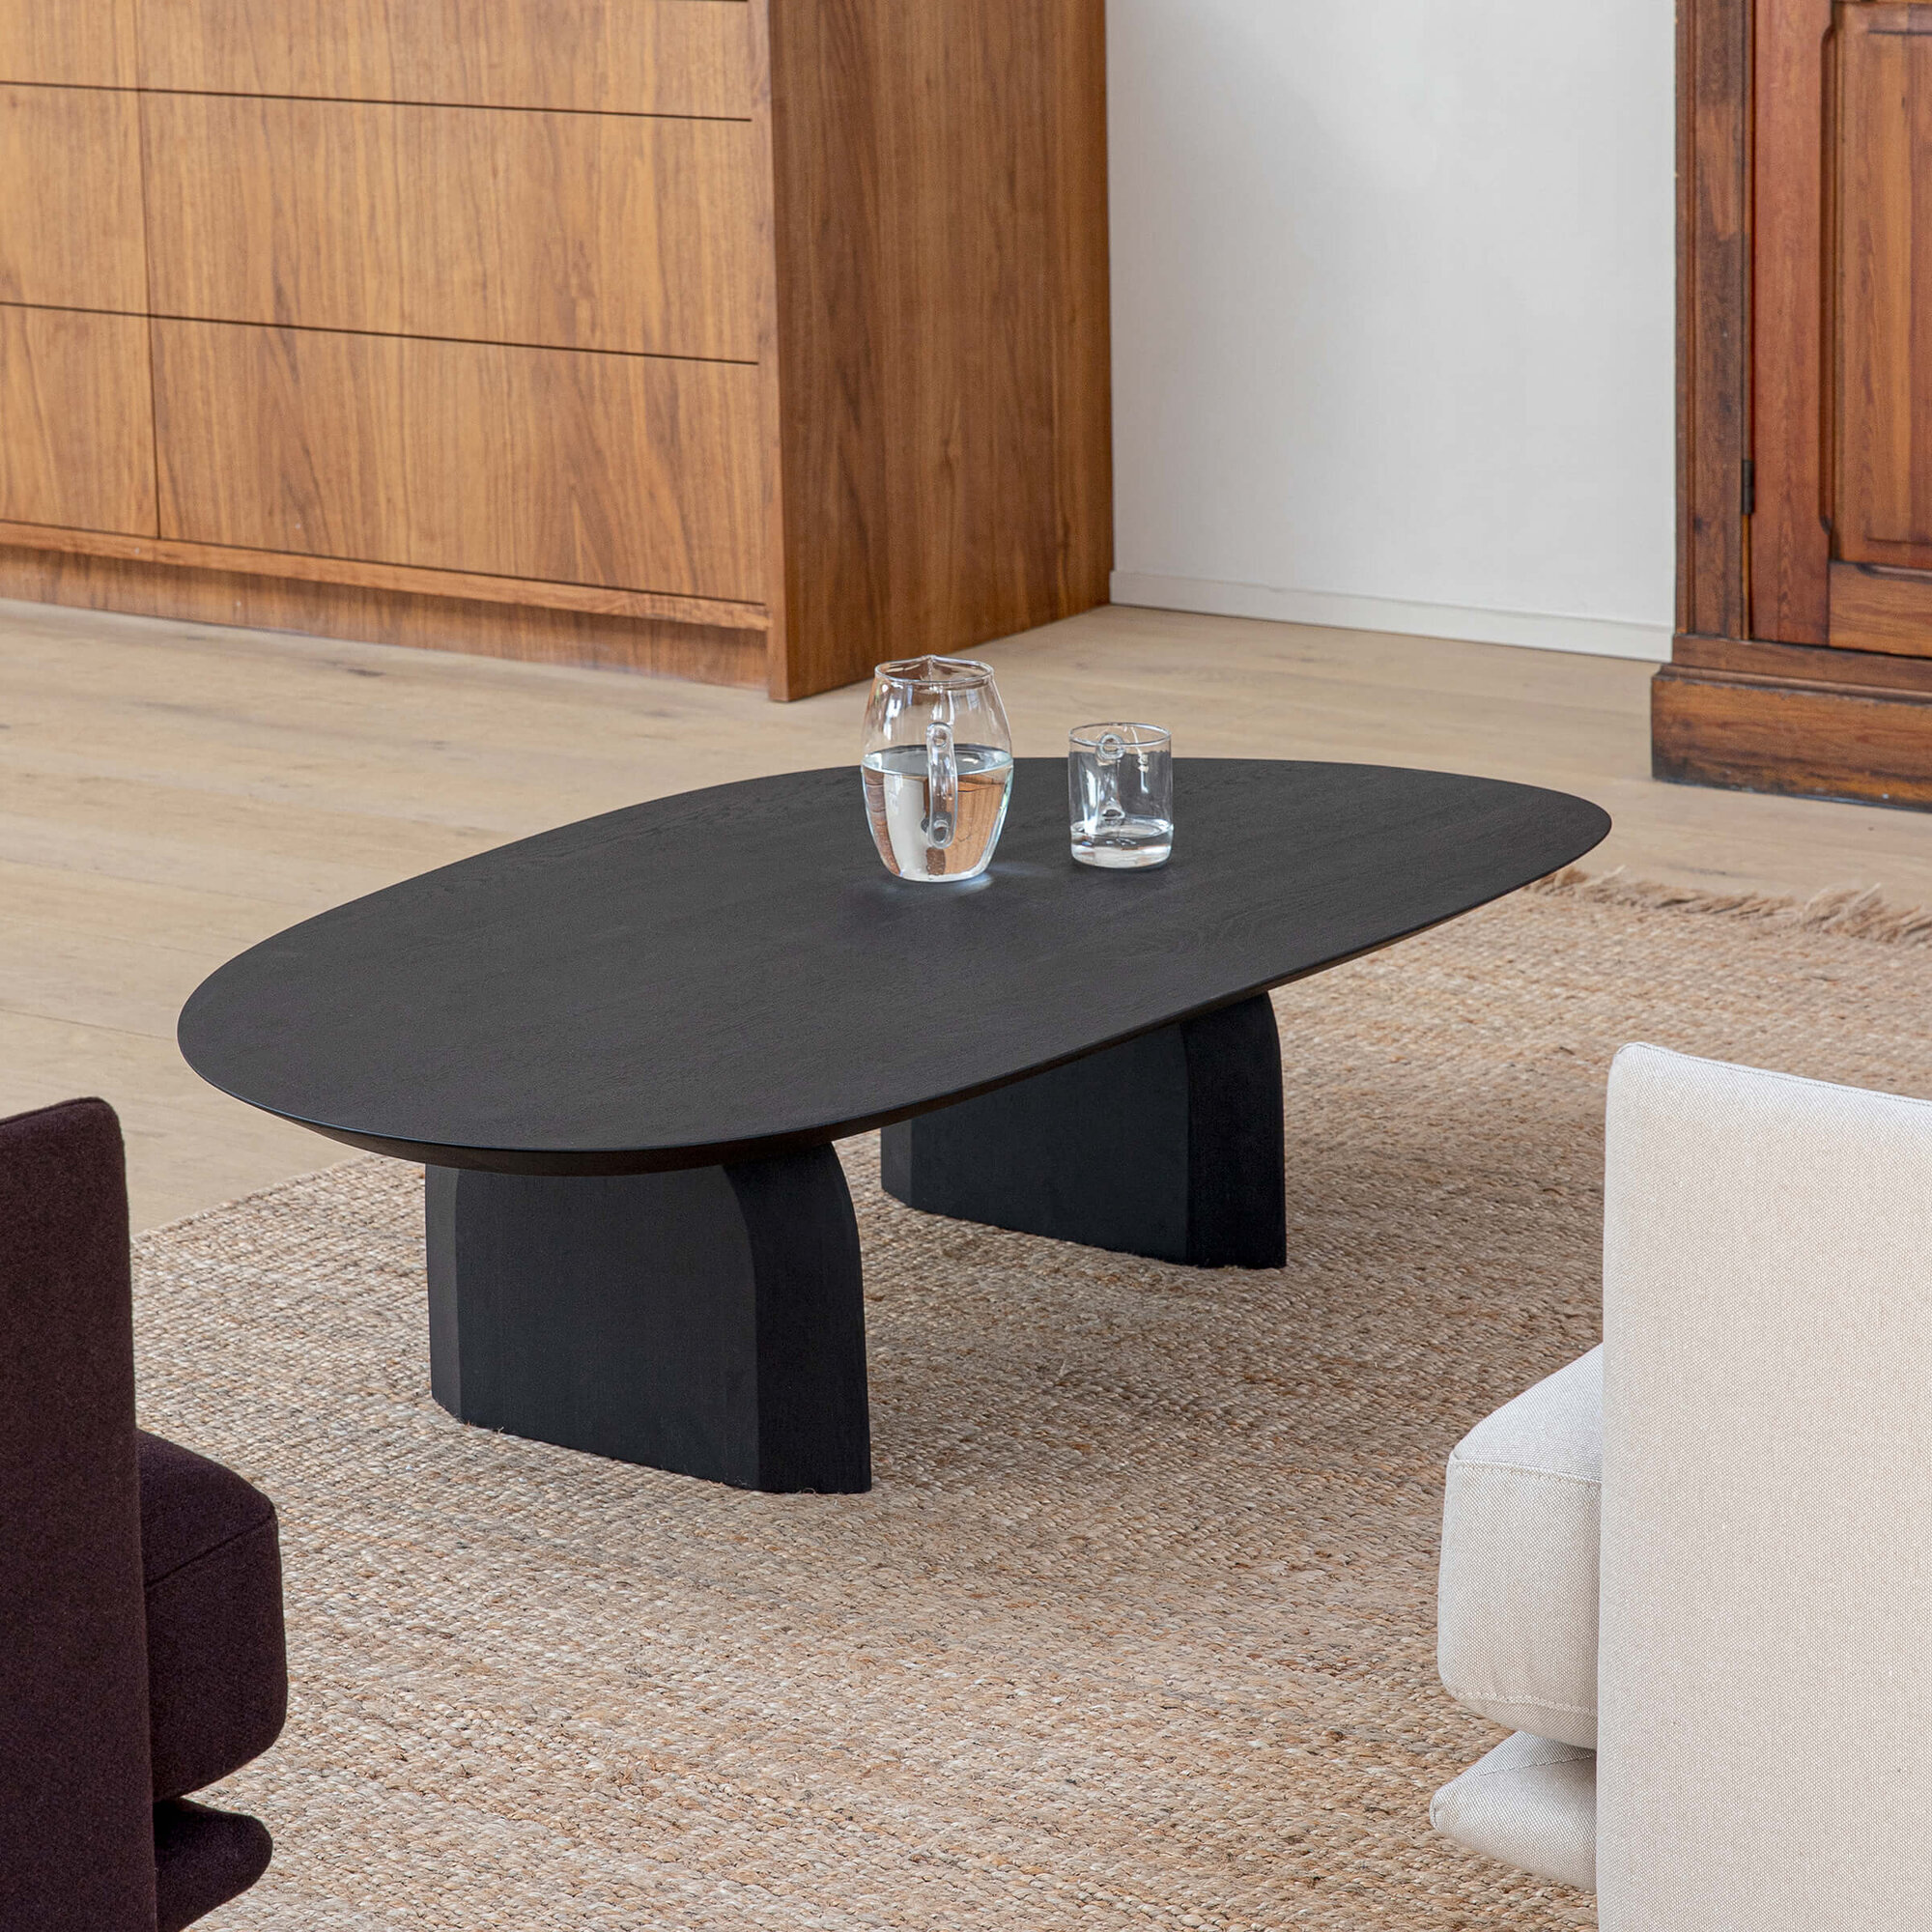 Design Coffee Table | Slot Coffee Table Oak hardwax oil natural light 3041 | Oak hardwax oil natural light 3041 | Studio HENK | 